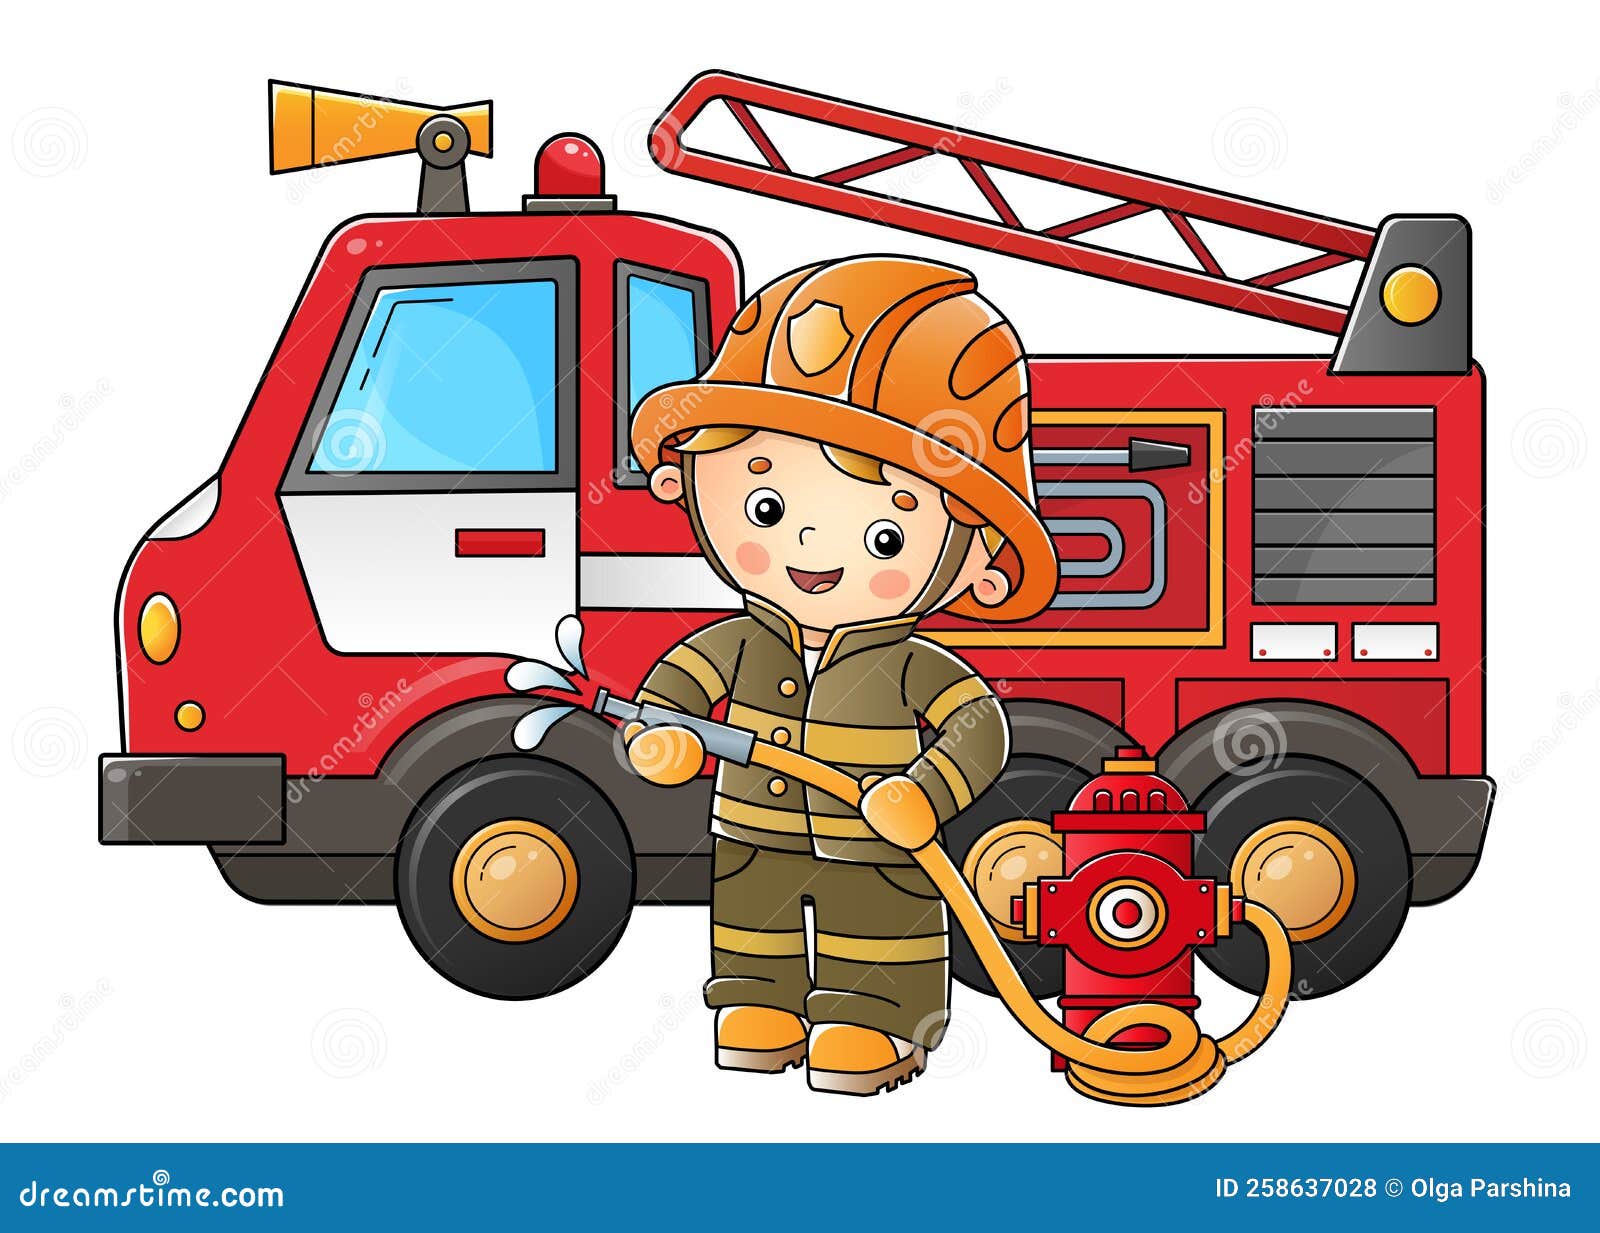 Cartoon Fire Truck With Fireman Or Firefighter Fire Fighting